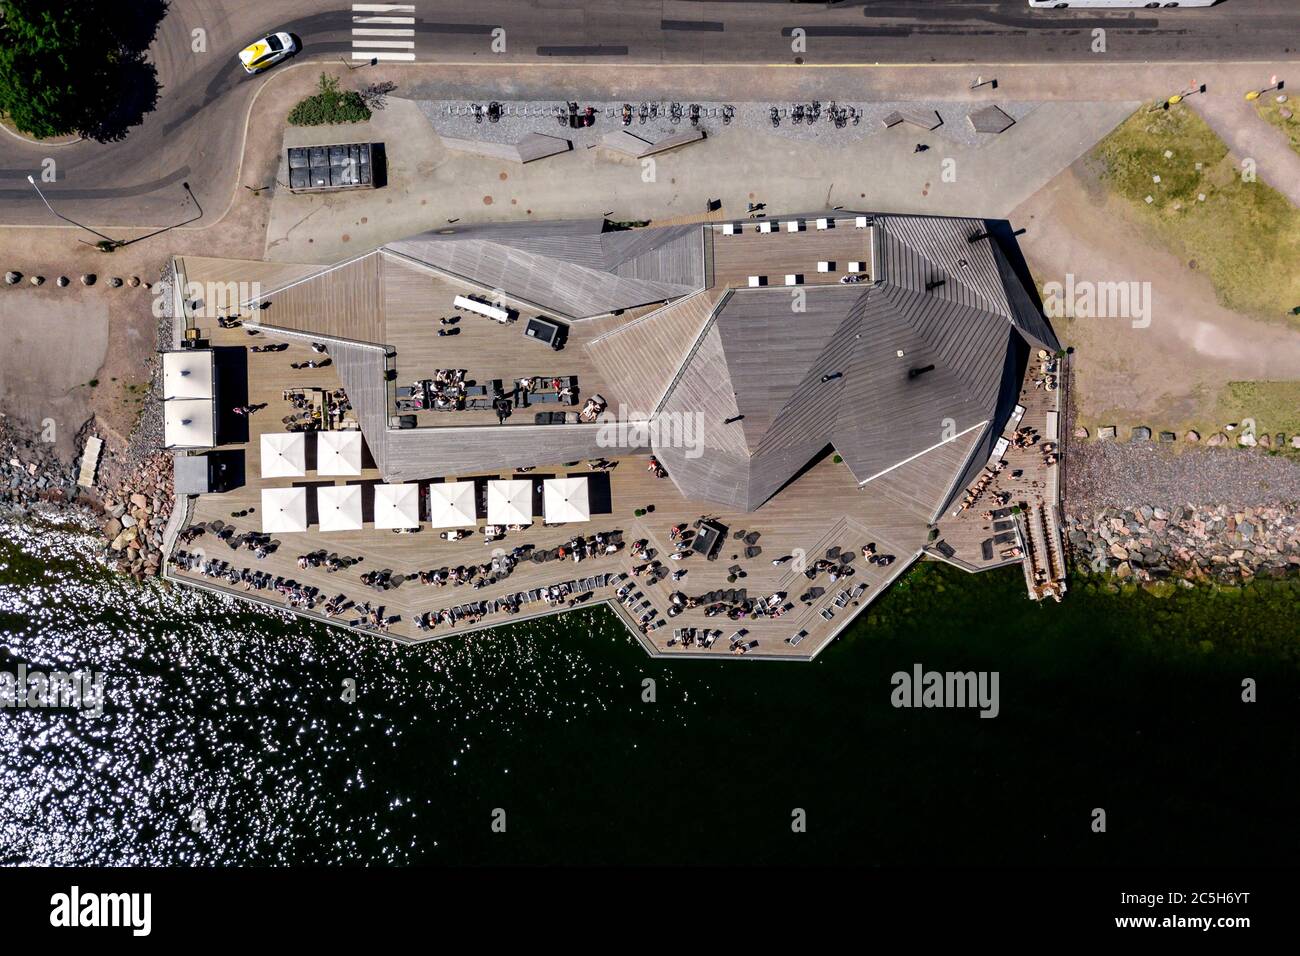 Helsinki, Finland - June 16, 2018: Aerial view of Loyly, modern wooden building, sauna and restaurant, Helsinki, Finland Stock Photo